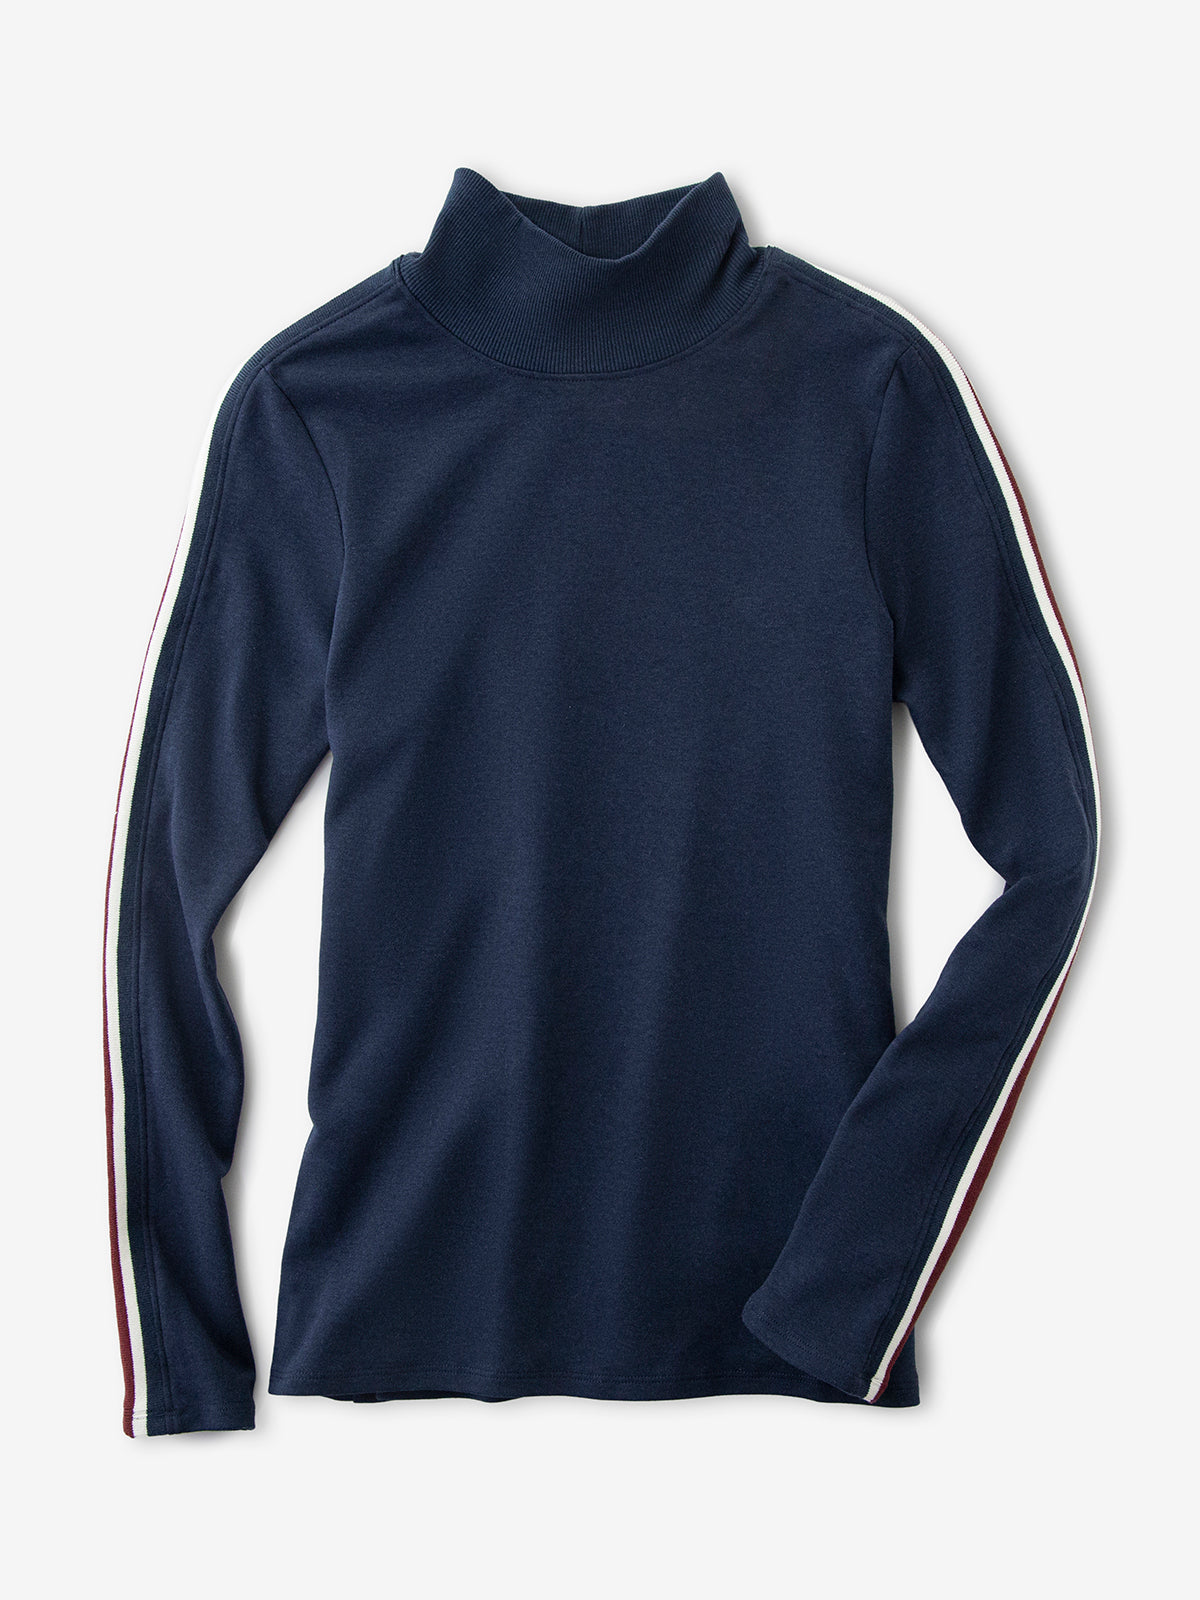 Apres Turtleneck Sweater Stripe (ClassicNavy/Garnet)